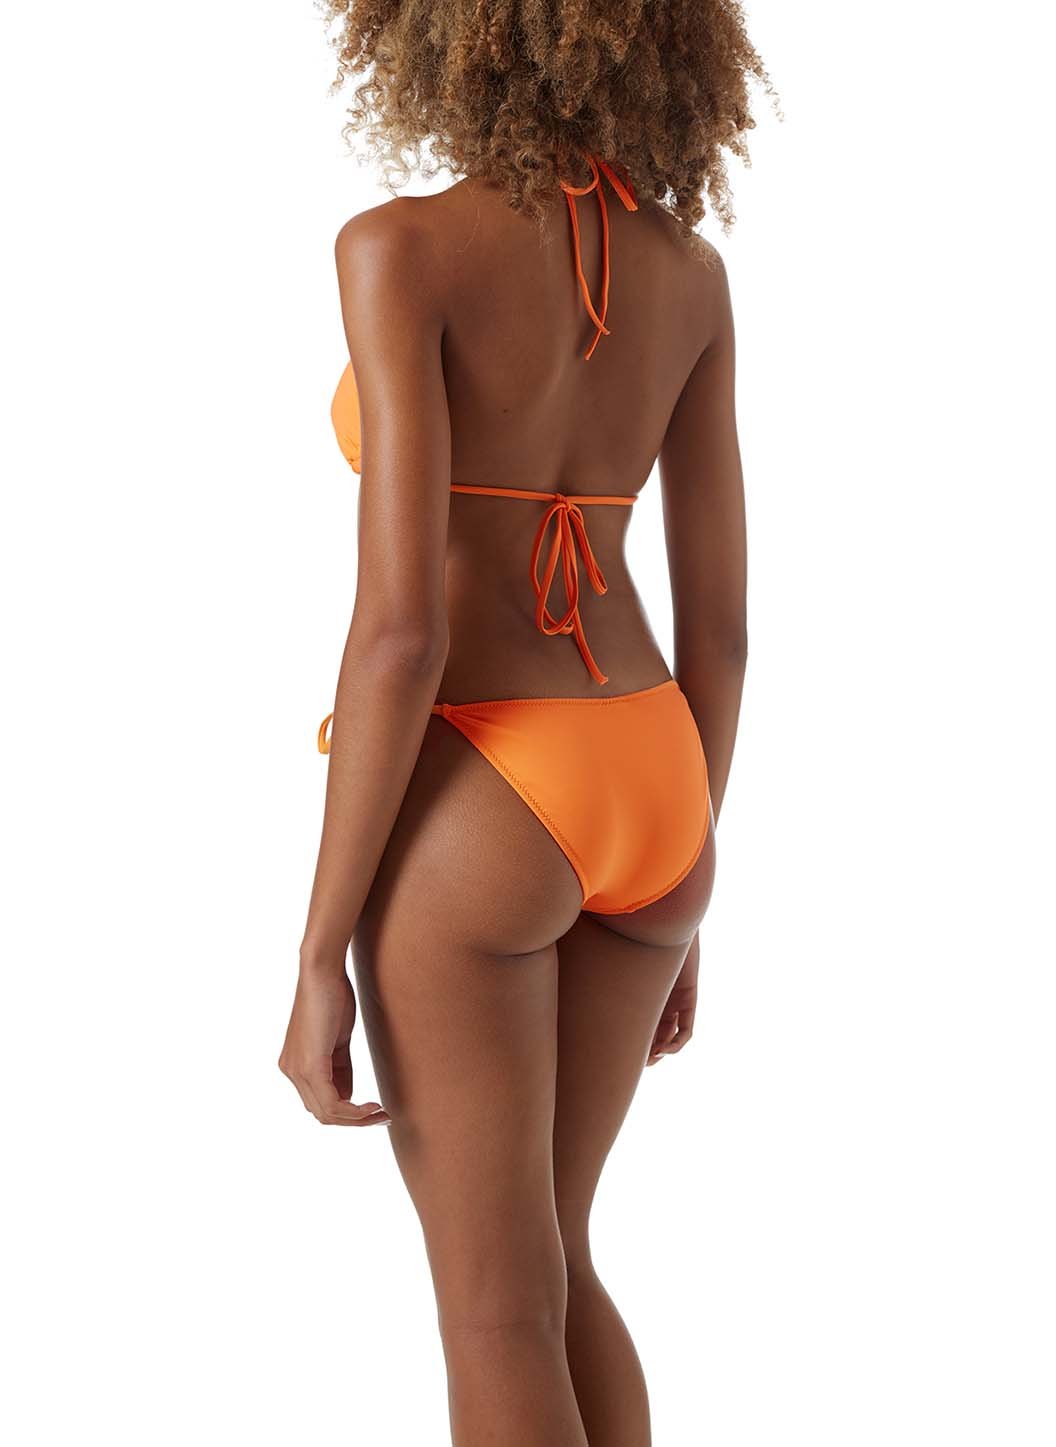 cancun orange classic triangle bikini model_B